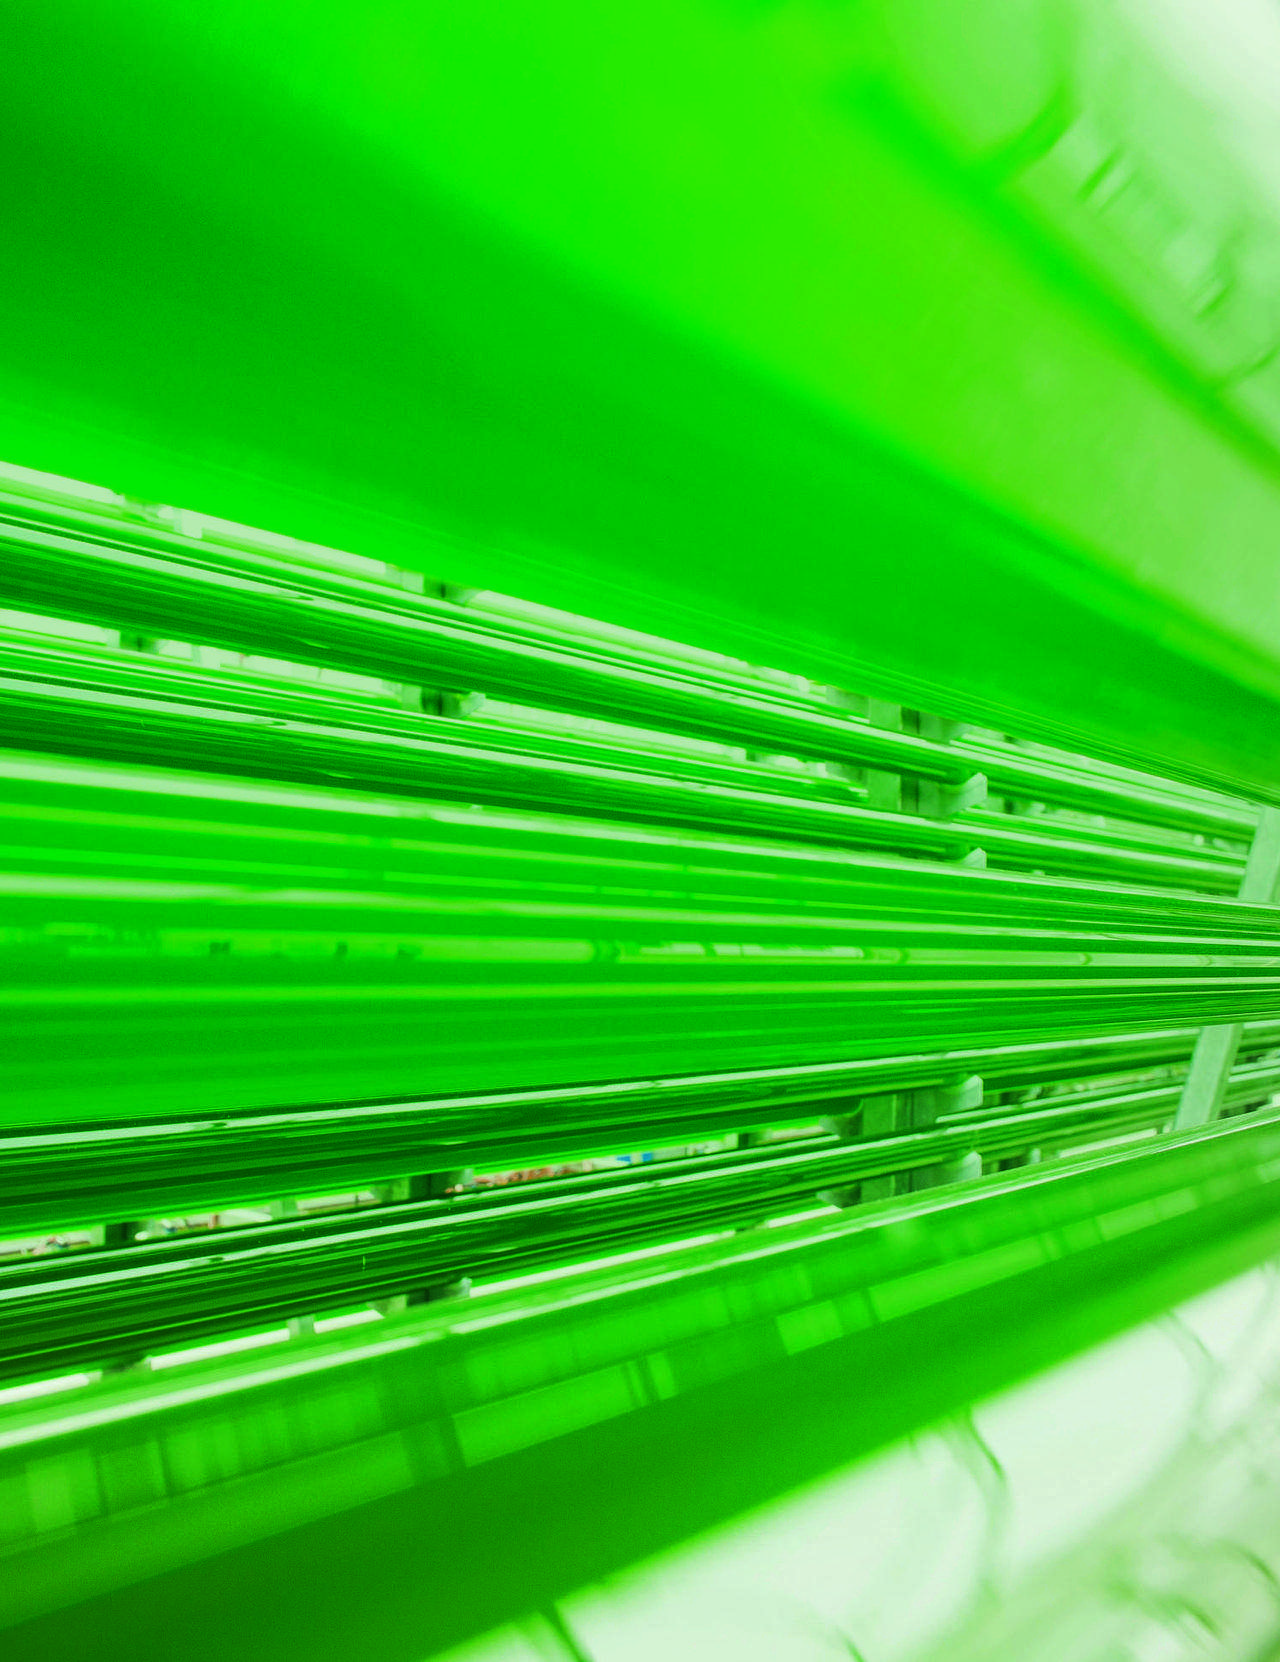 Photobioreactor growing microalgae in SCHOTT glass tubes